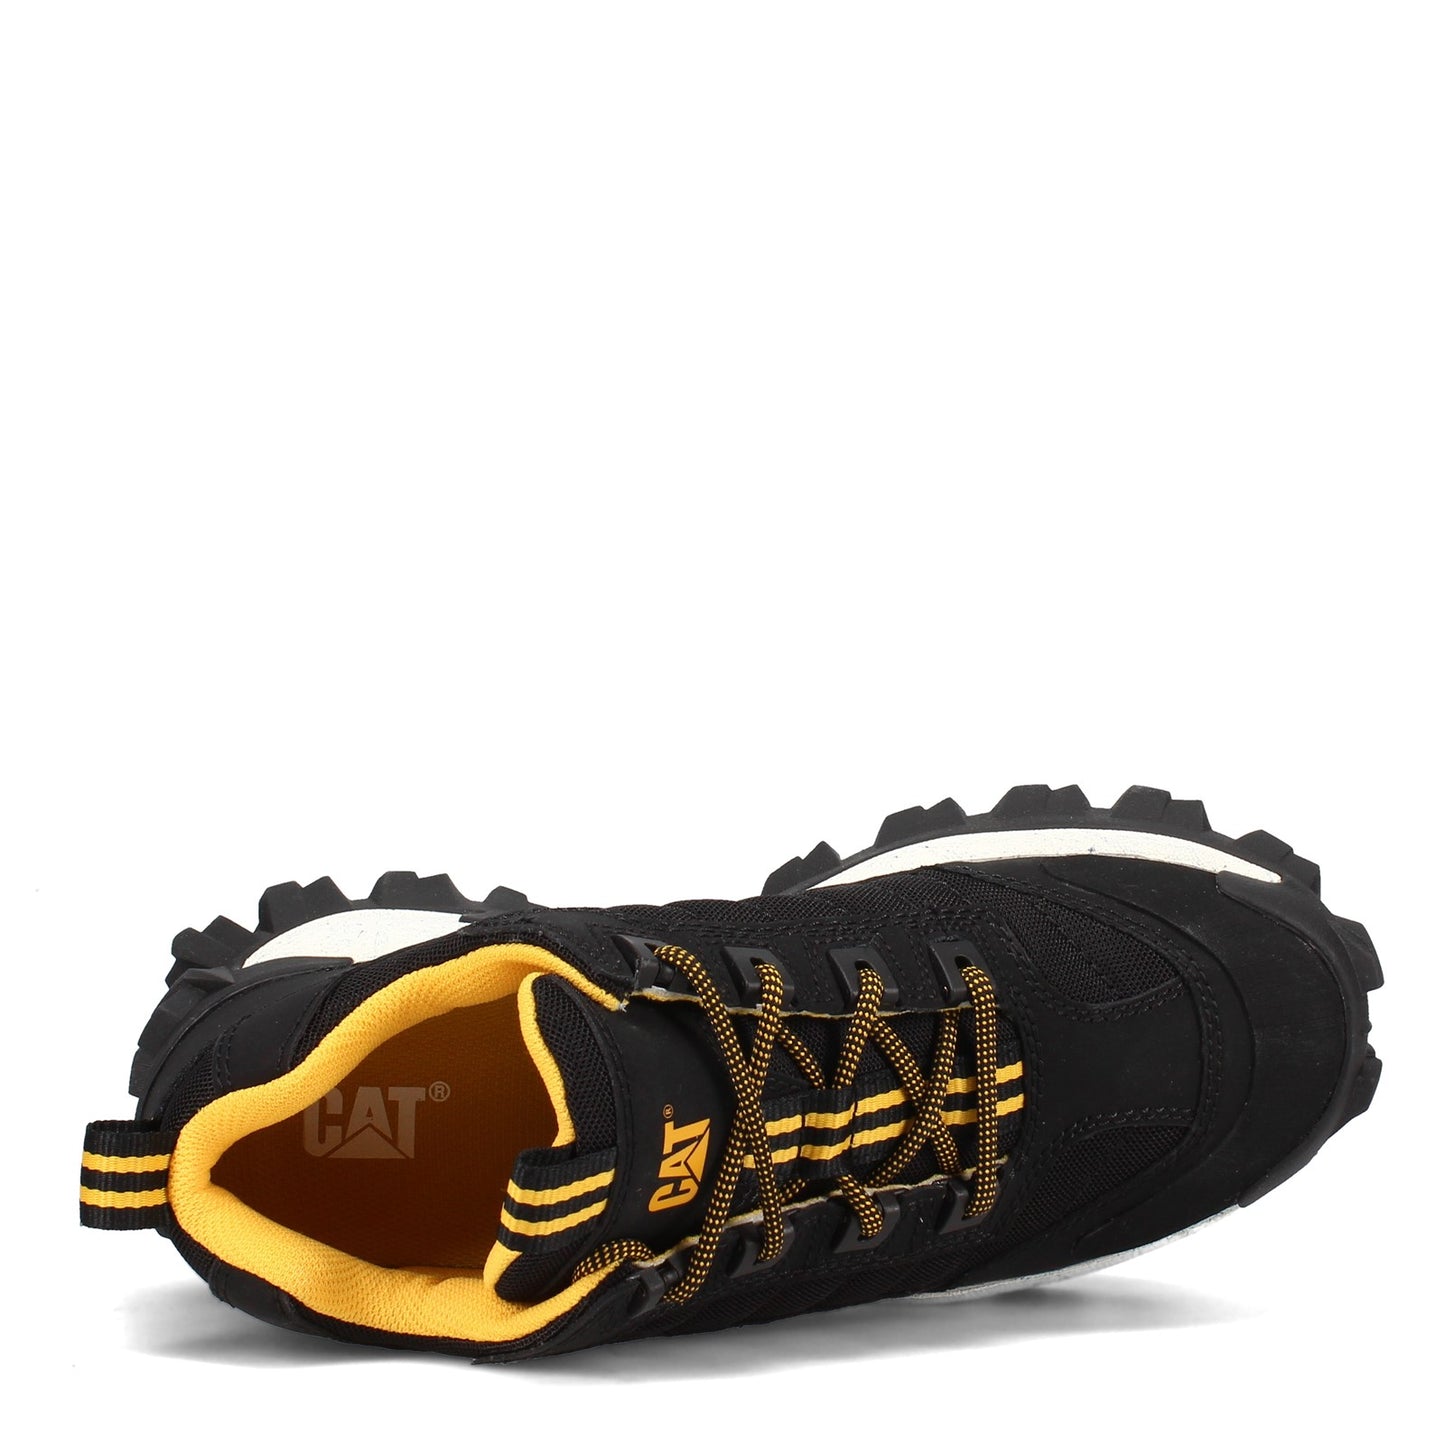 Peltz Shoes  Unisex Caterpillar Intruder Trainer BLACK / WHITE P723901